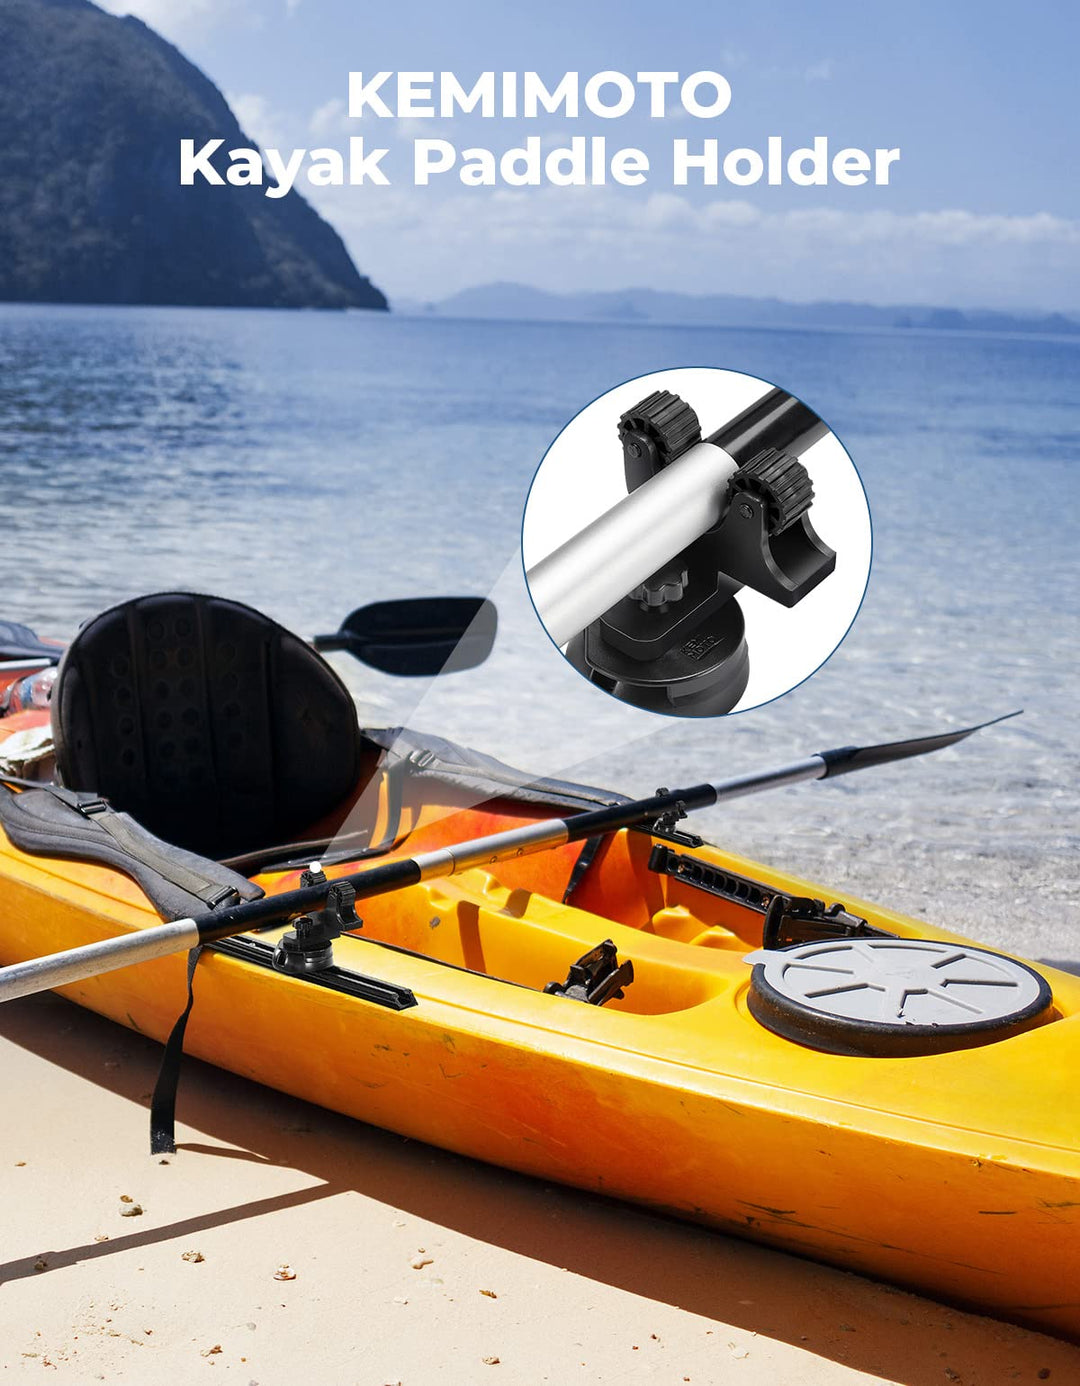 Kayak Paddle Holder - The #1 [*Safest*] Way to Hold Kayak Paddles